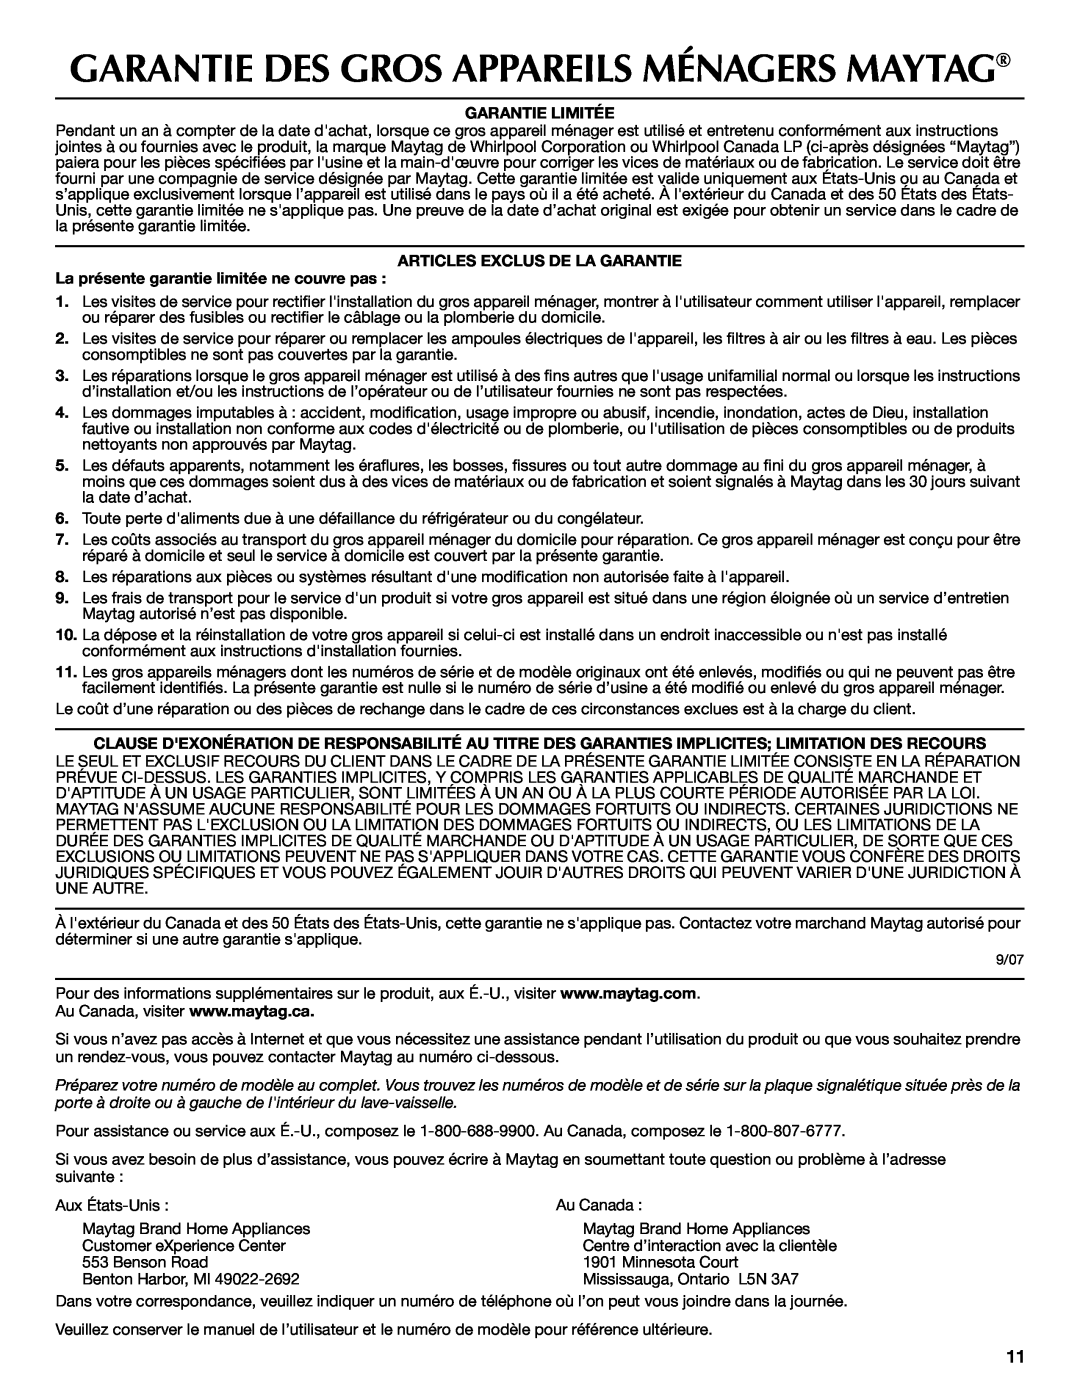 Maytag W10157789A warranty Garantie Des Gros Appareils Ménagers Maytag, Garantie Limitée, Articles Exclus De La Garantie 